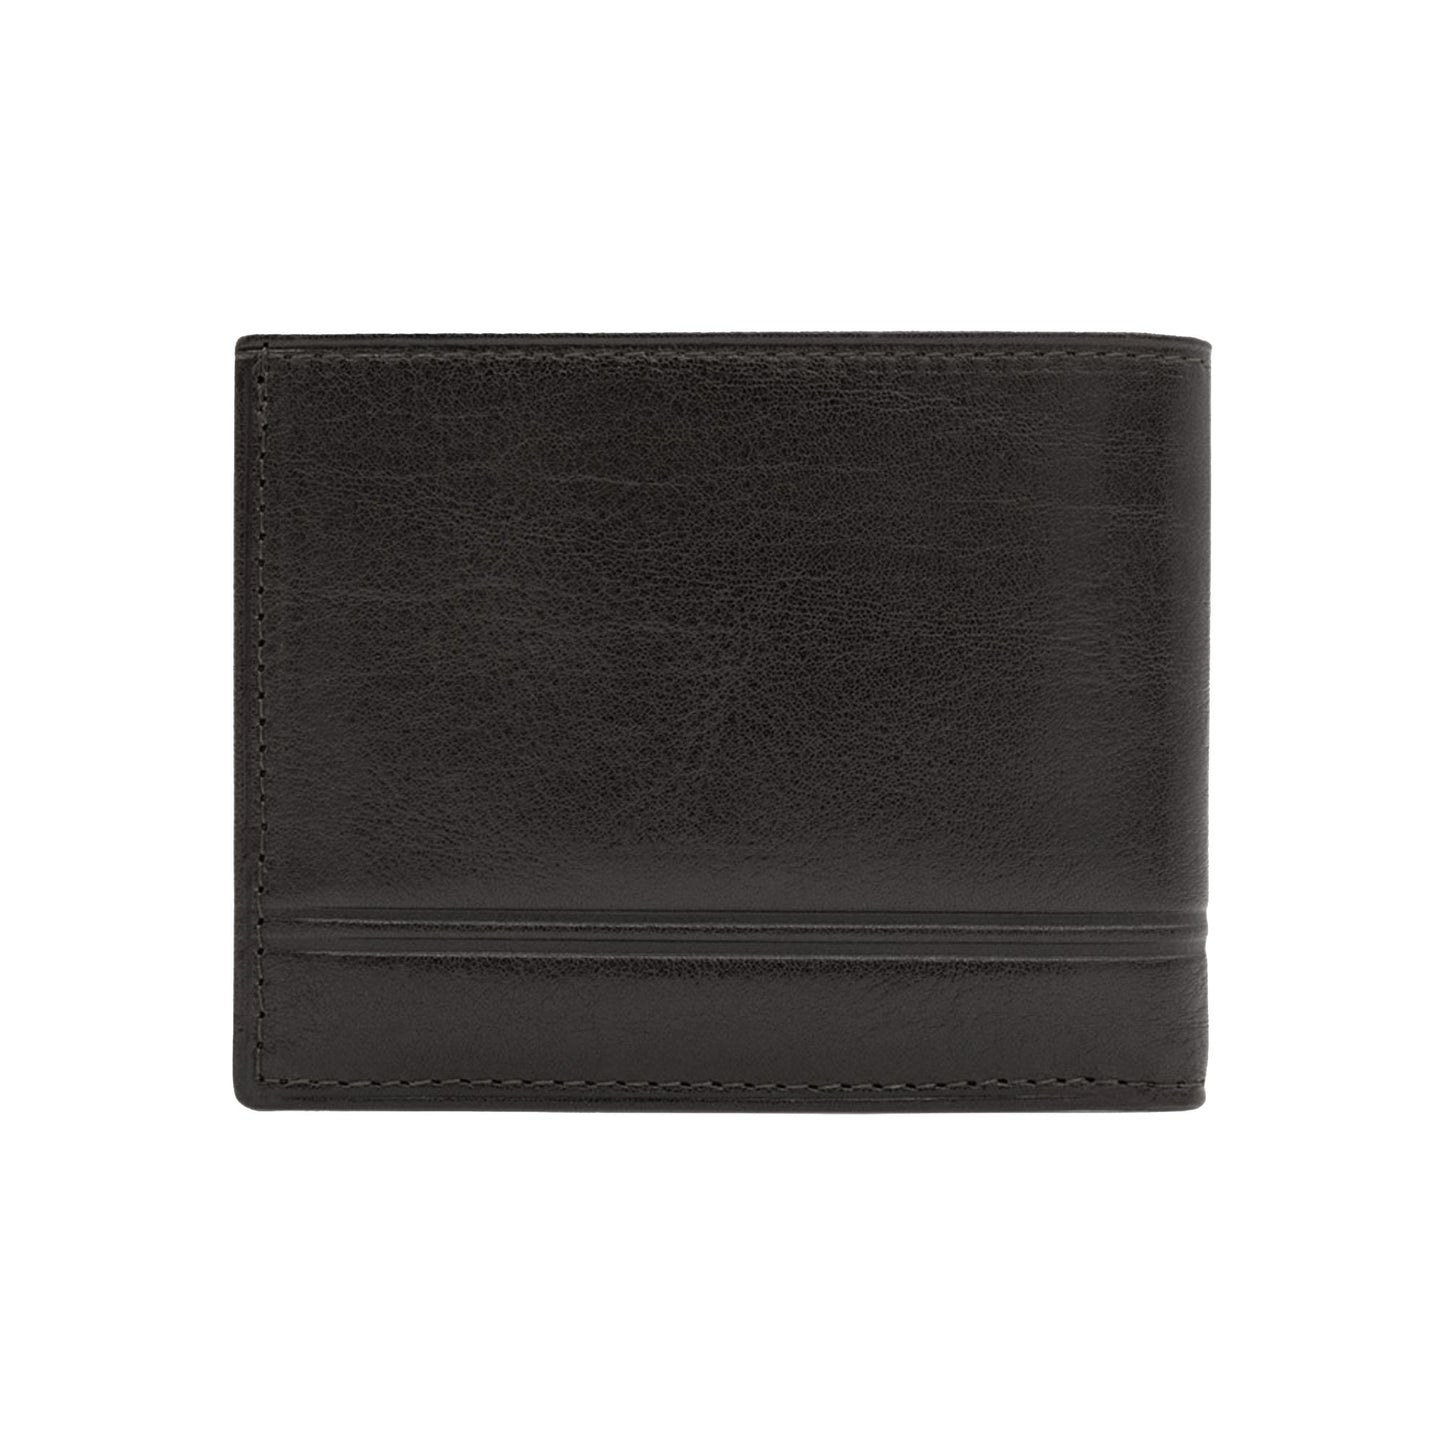 Cavalinho Men's Trifold Leather Wallet - Black - 28610523.01.99_3